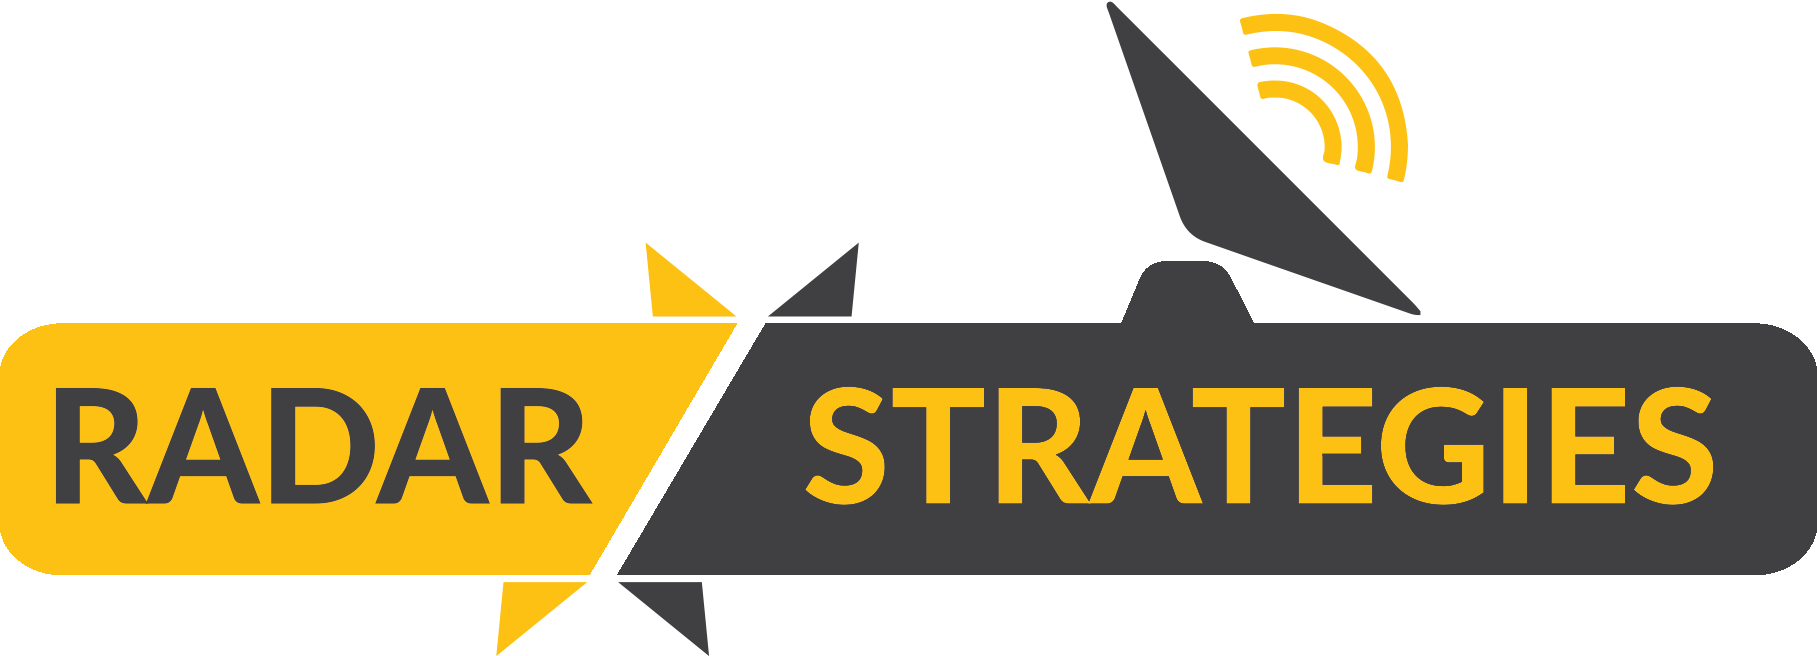 Radar Strategies logo